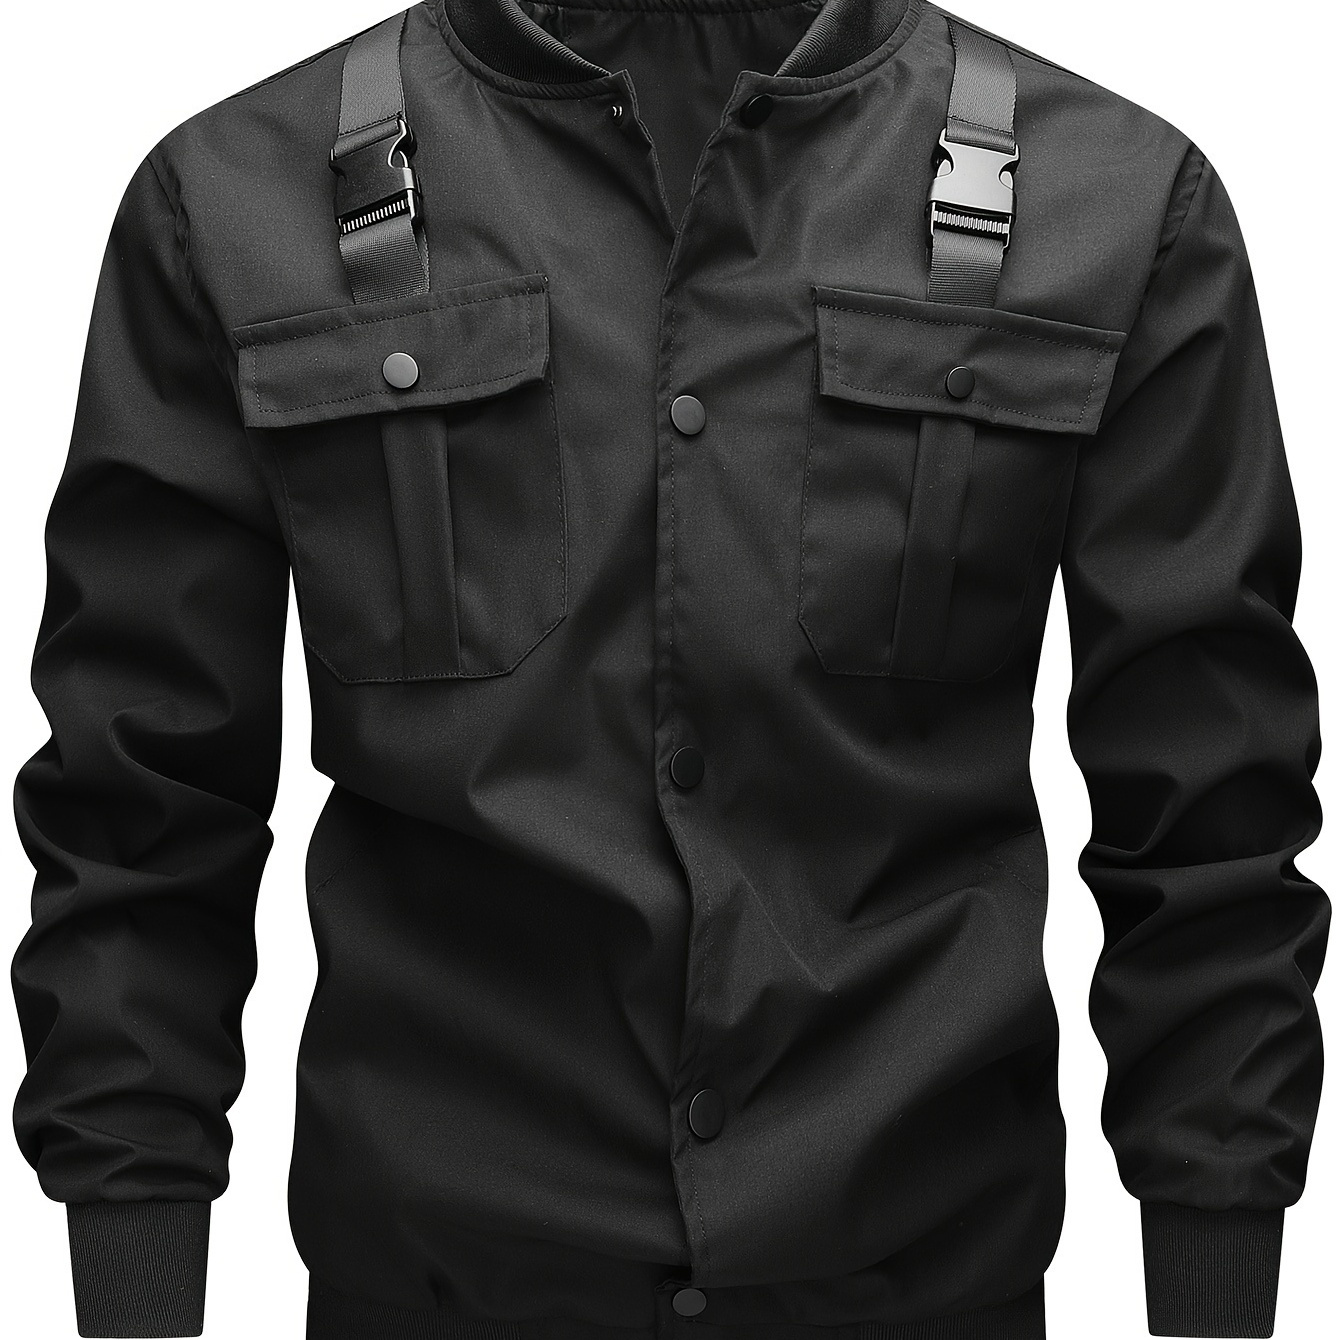 

Men's Casual Tech Wear Biker Jacket, Chic Street Style Baseball Collar Bomber Jacket